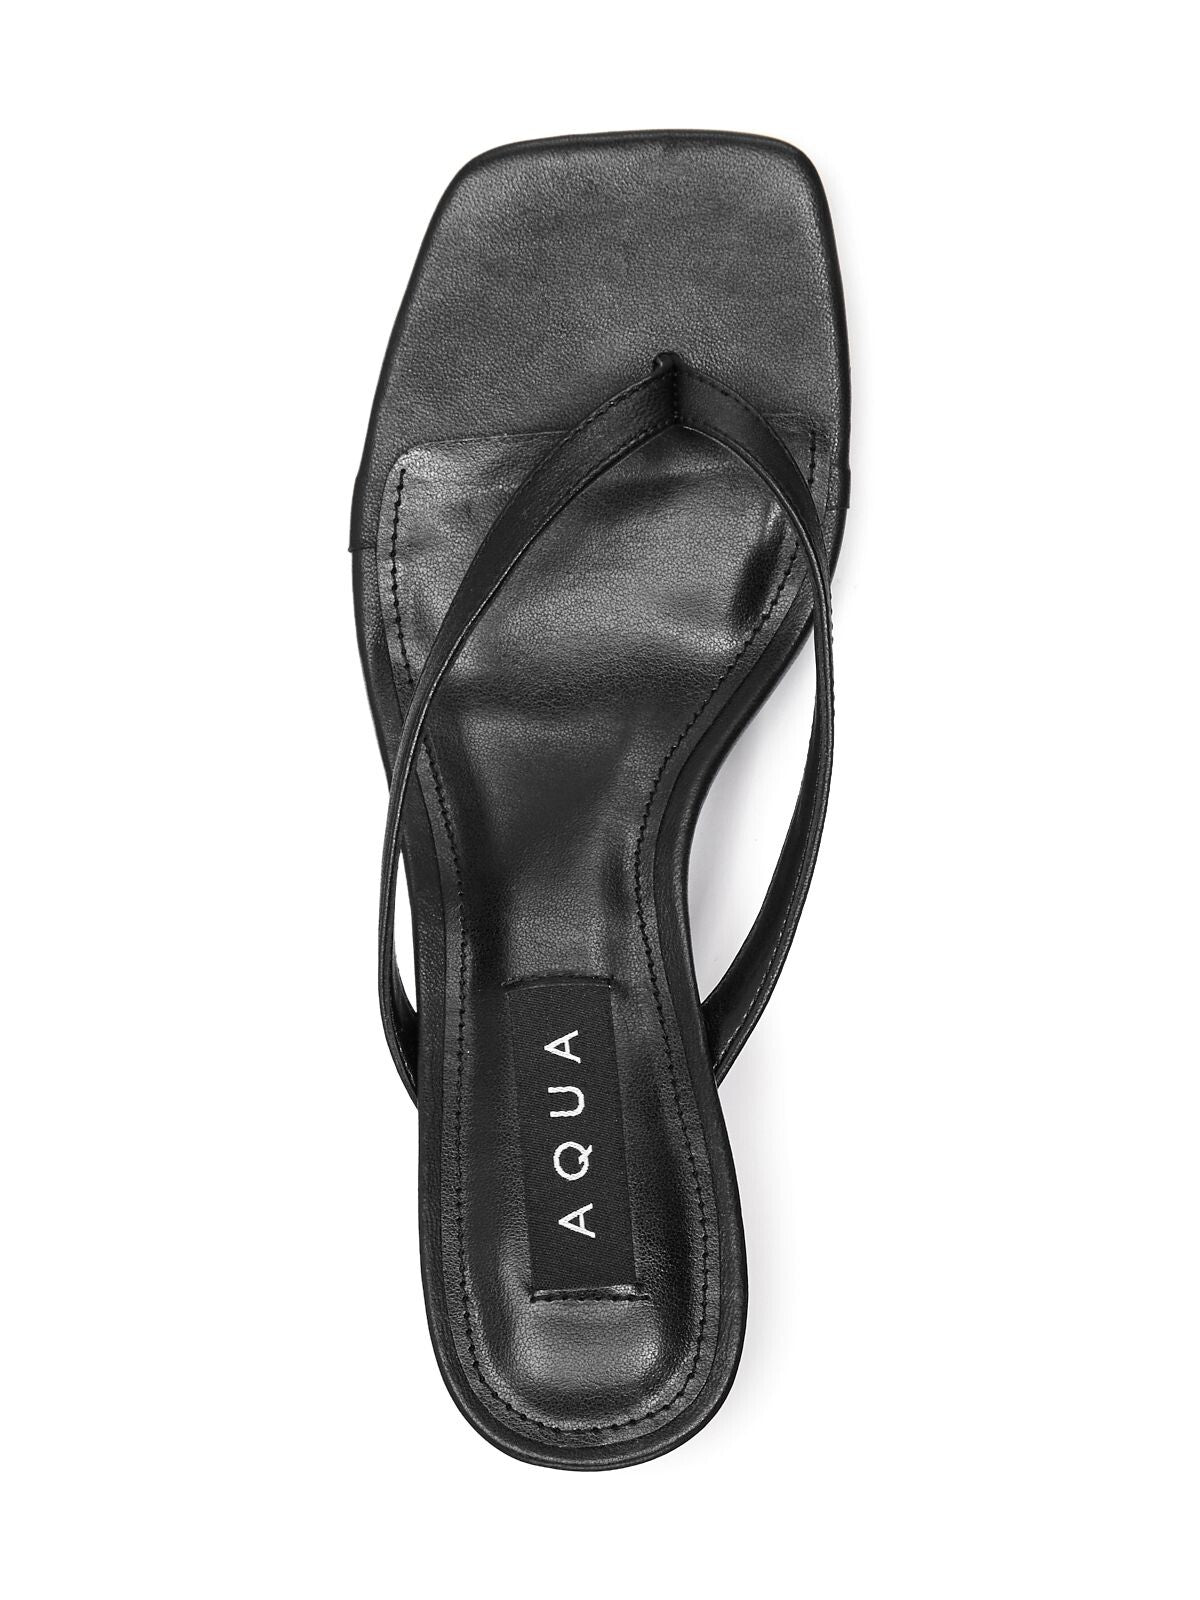 AQUA Womens Black Croc Embossed Cushioned Elsie Square Toe Flare Slip On Leather Thong Sandals Shoes 6.5 M